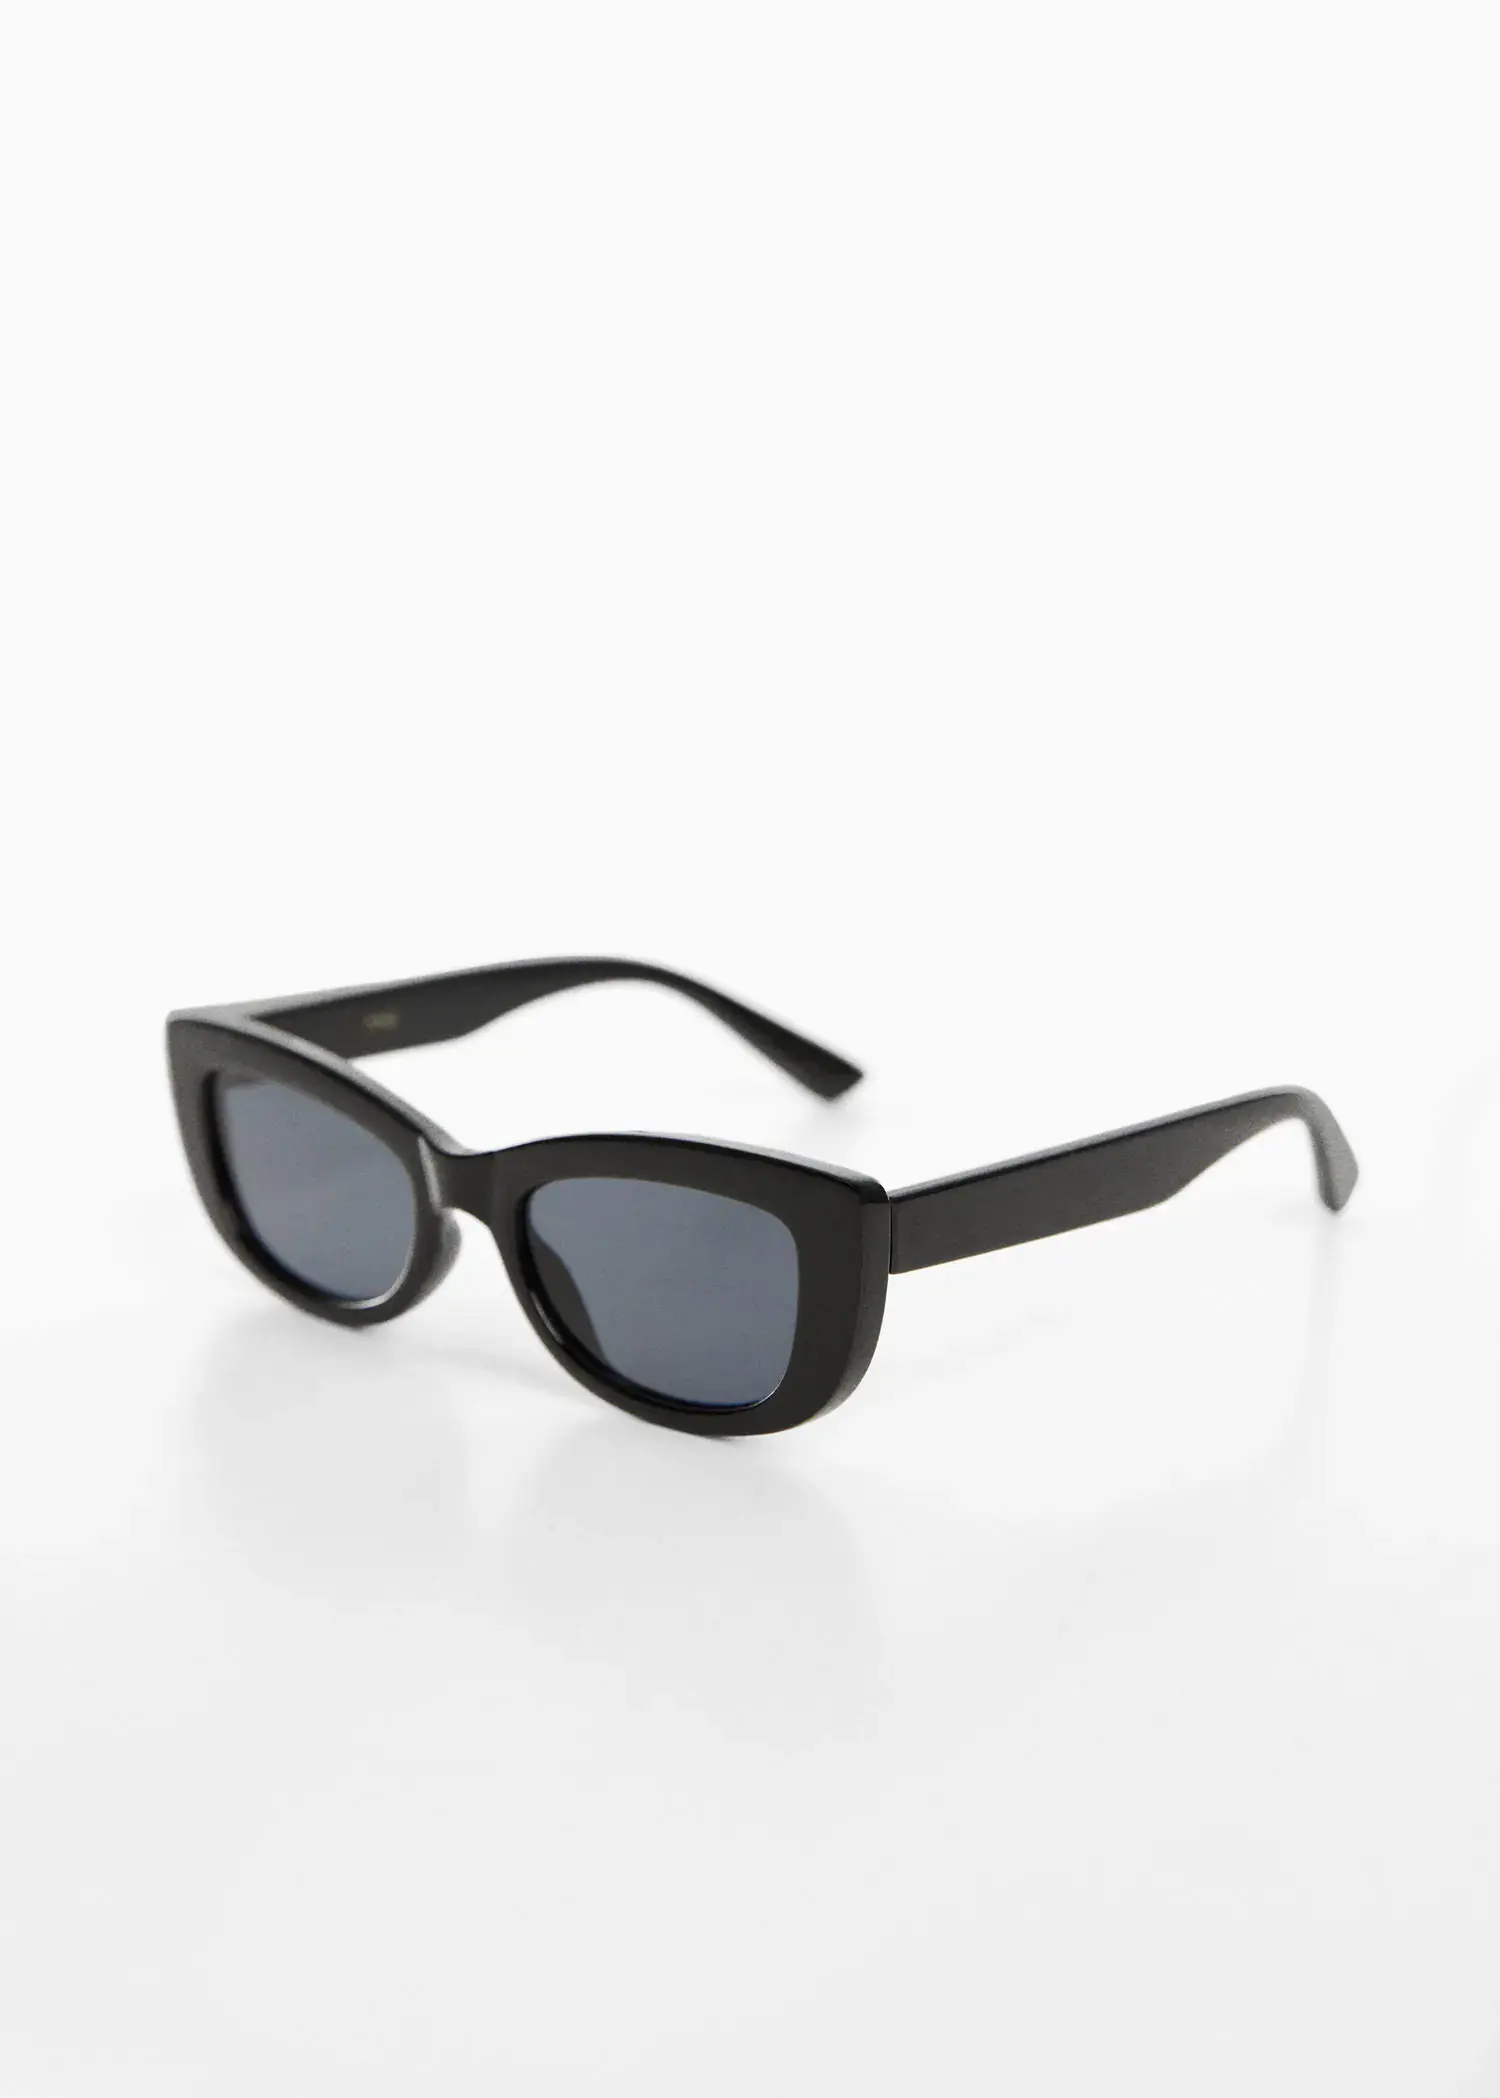 Mango Retro style sunglasses. 3